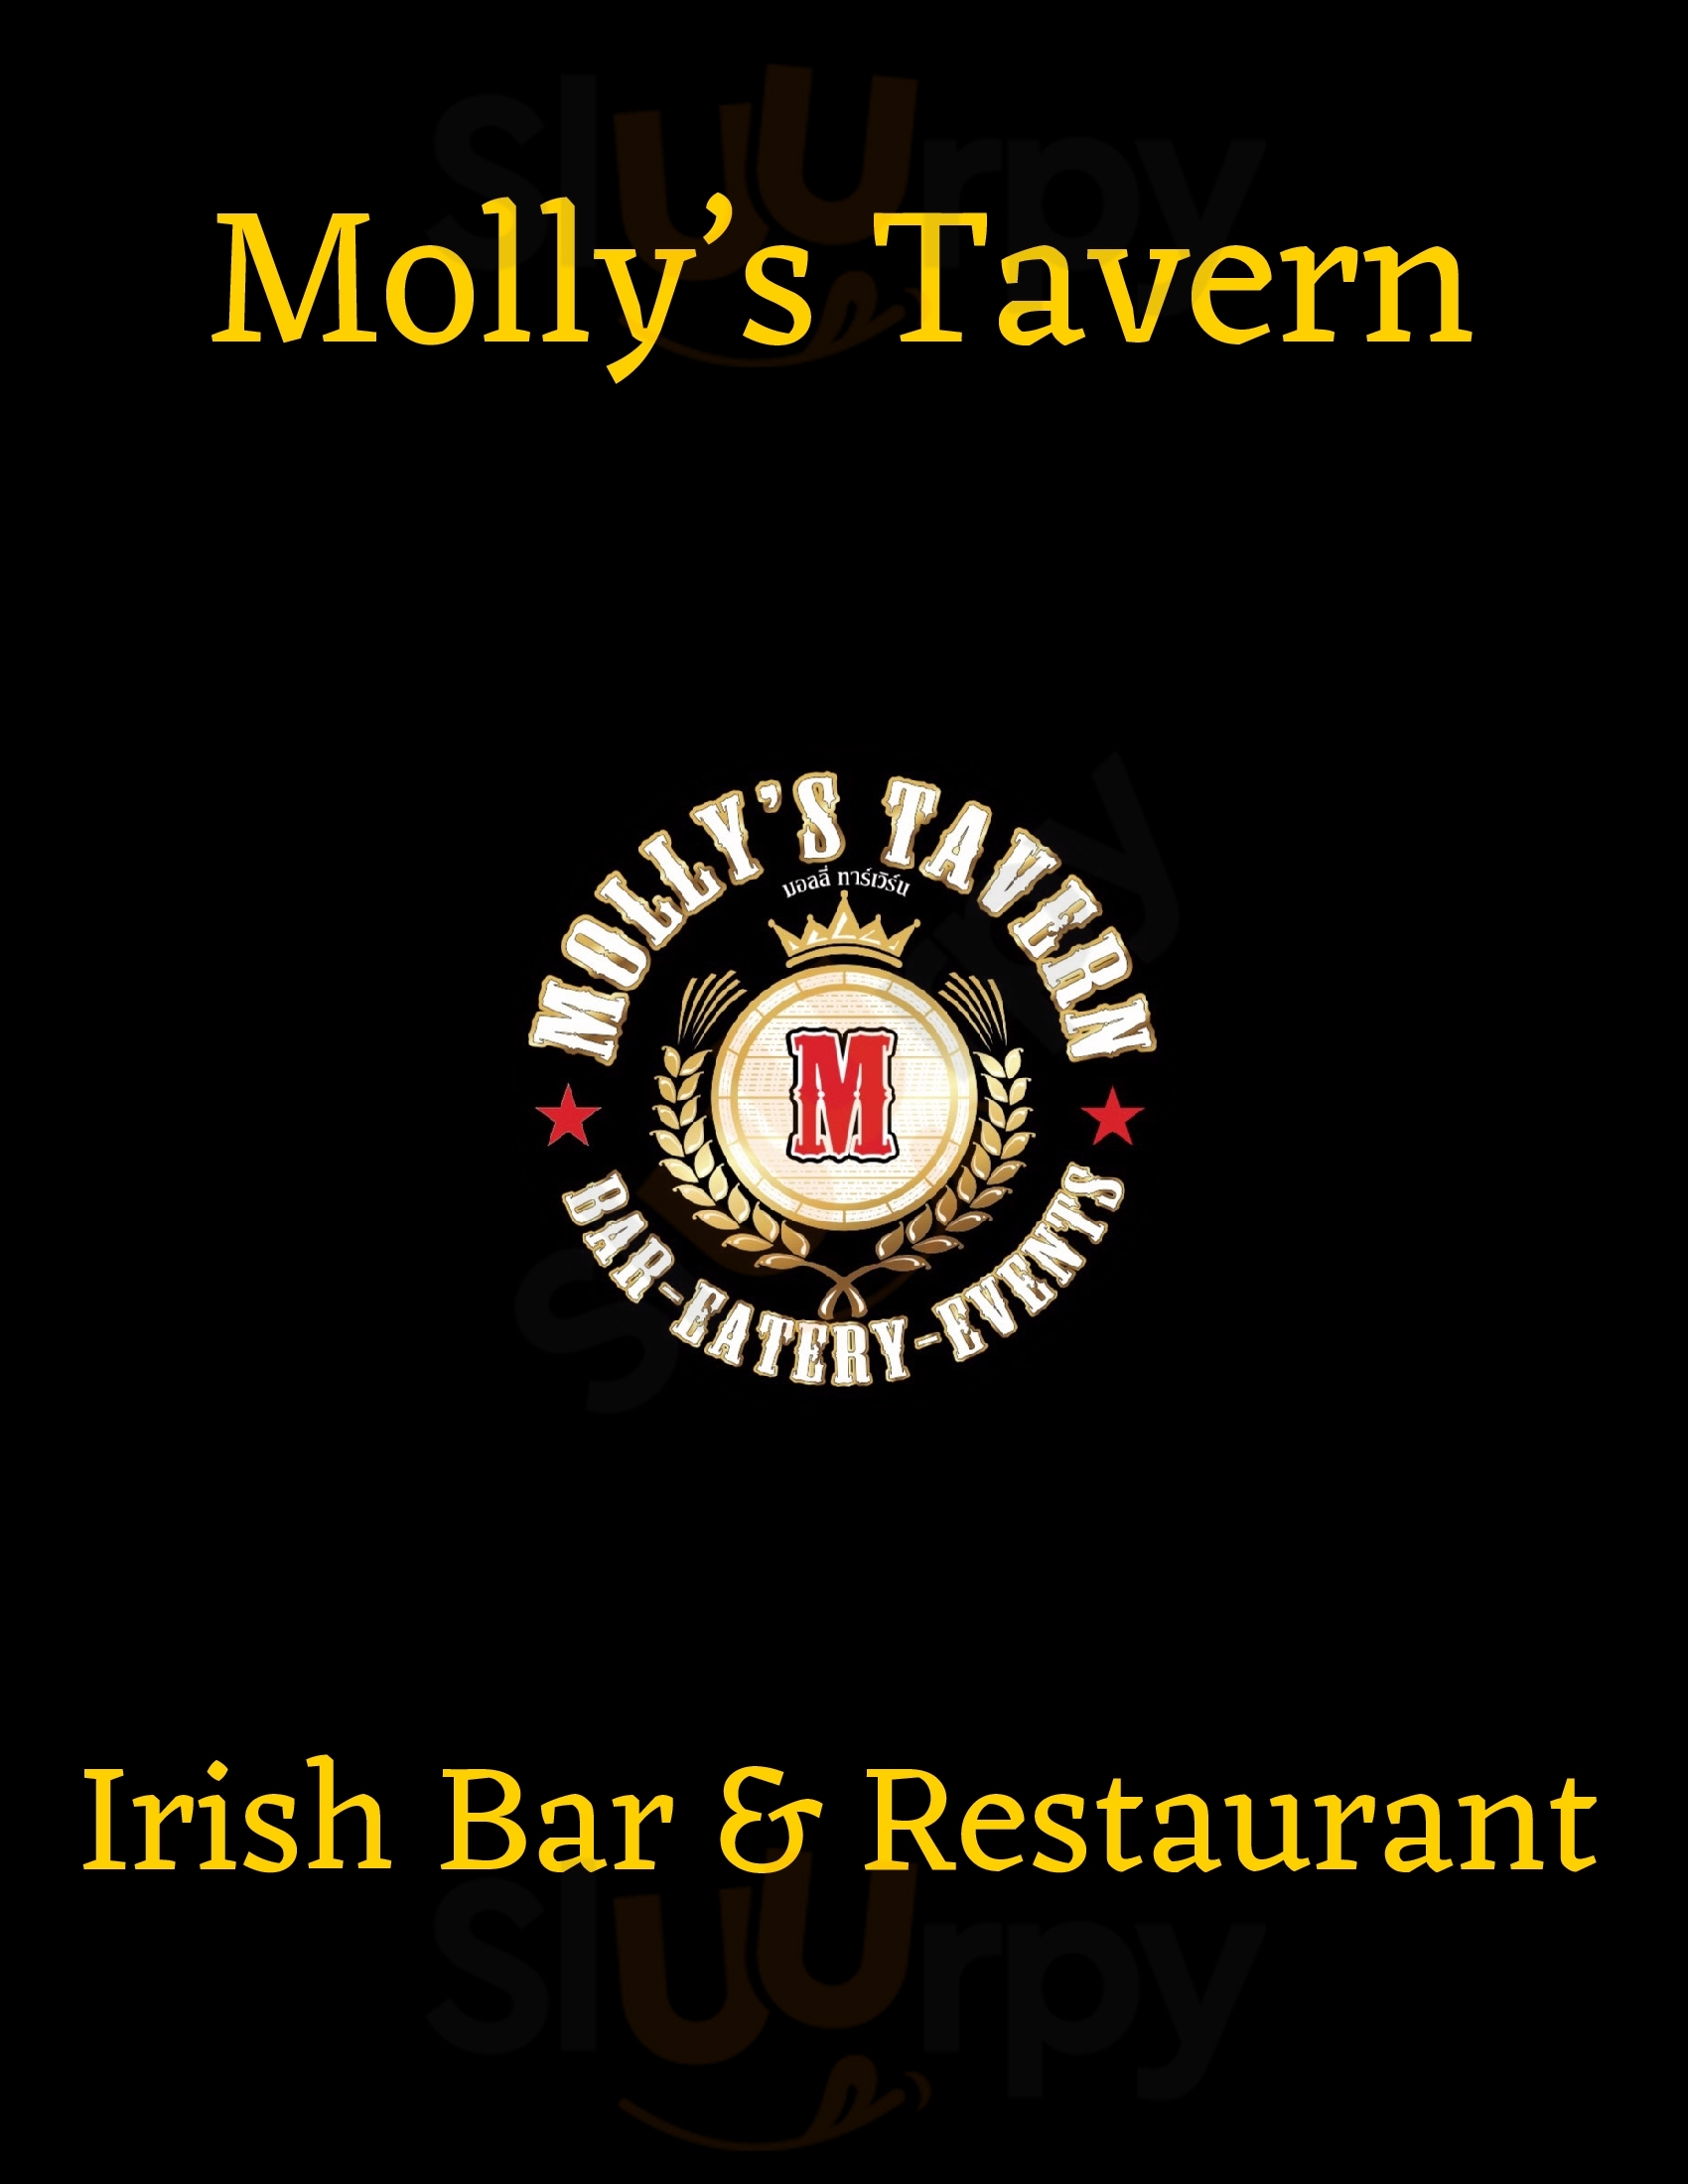 Molly's Tavern Irish Bar & Restaurant ป่าตอง Menu - 1